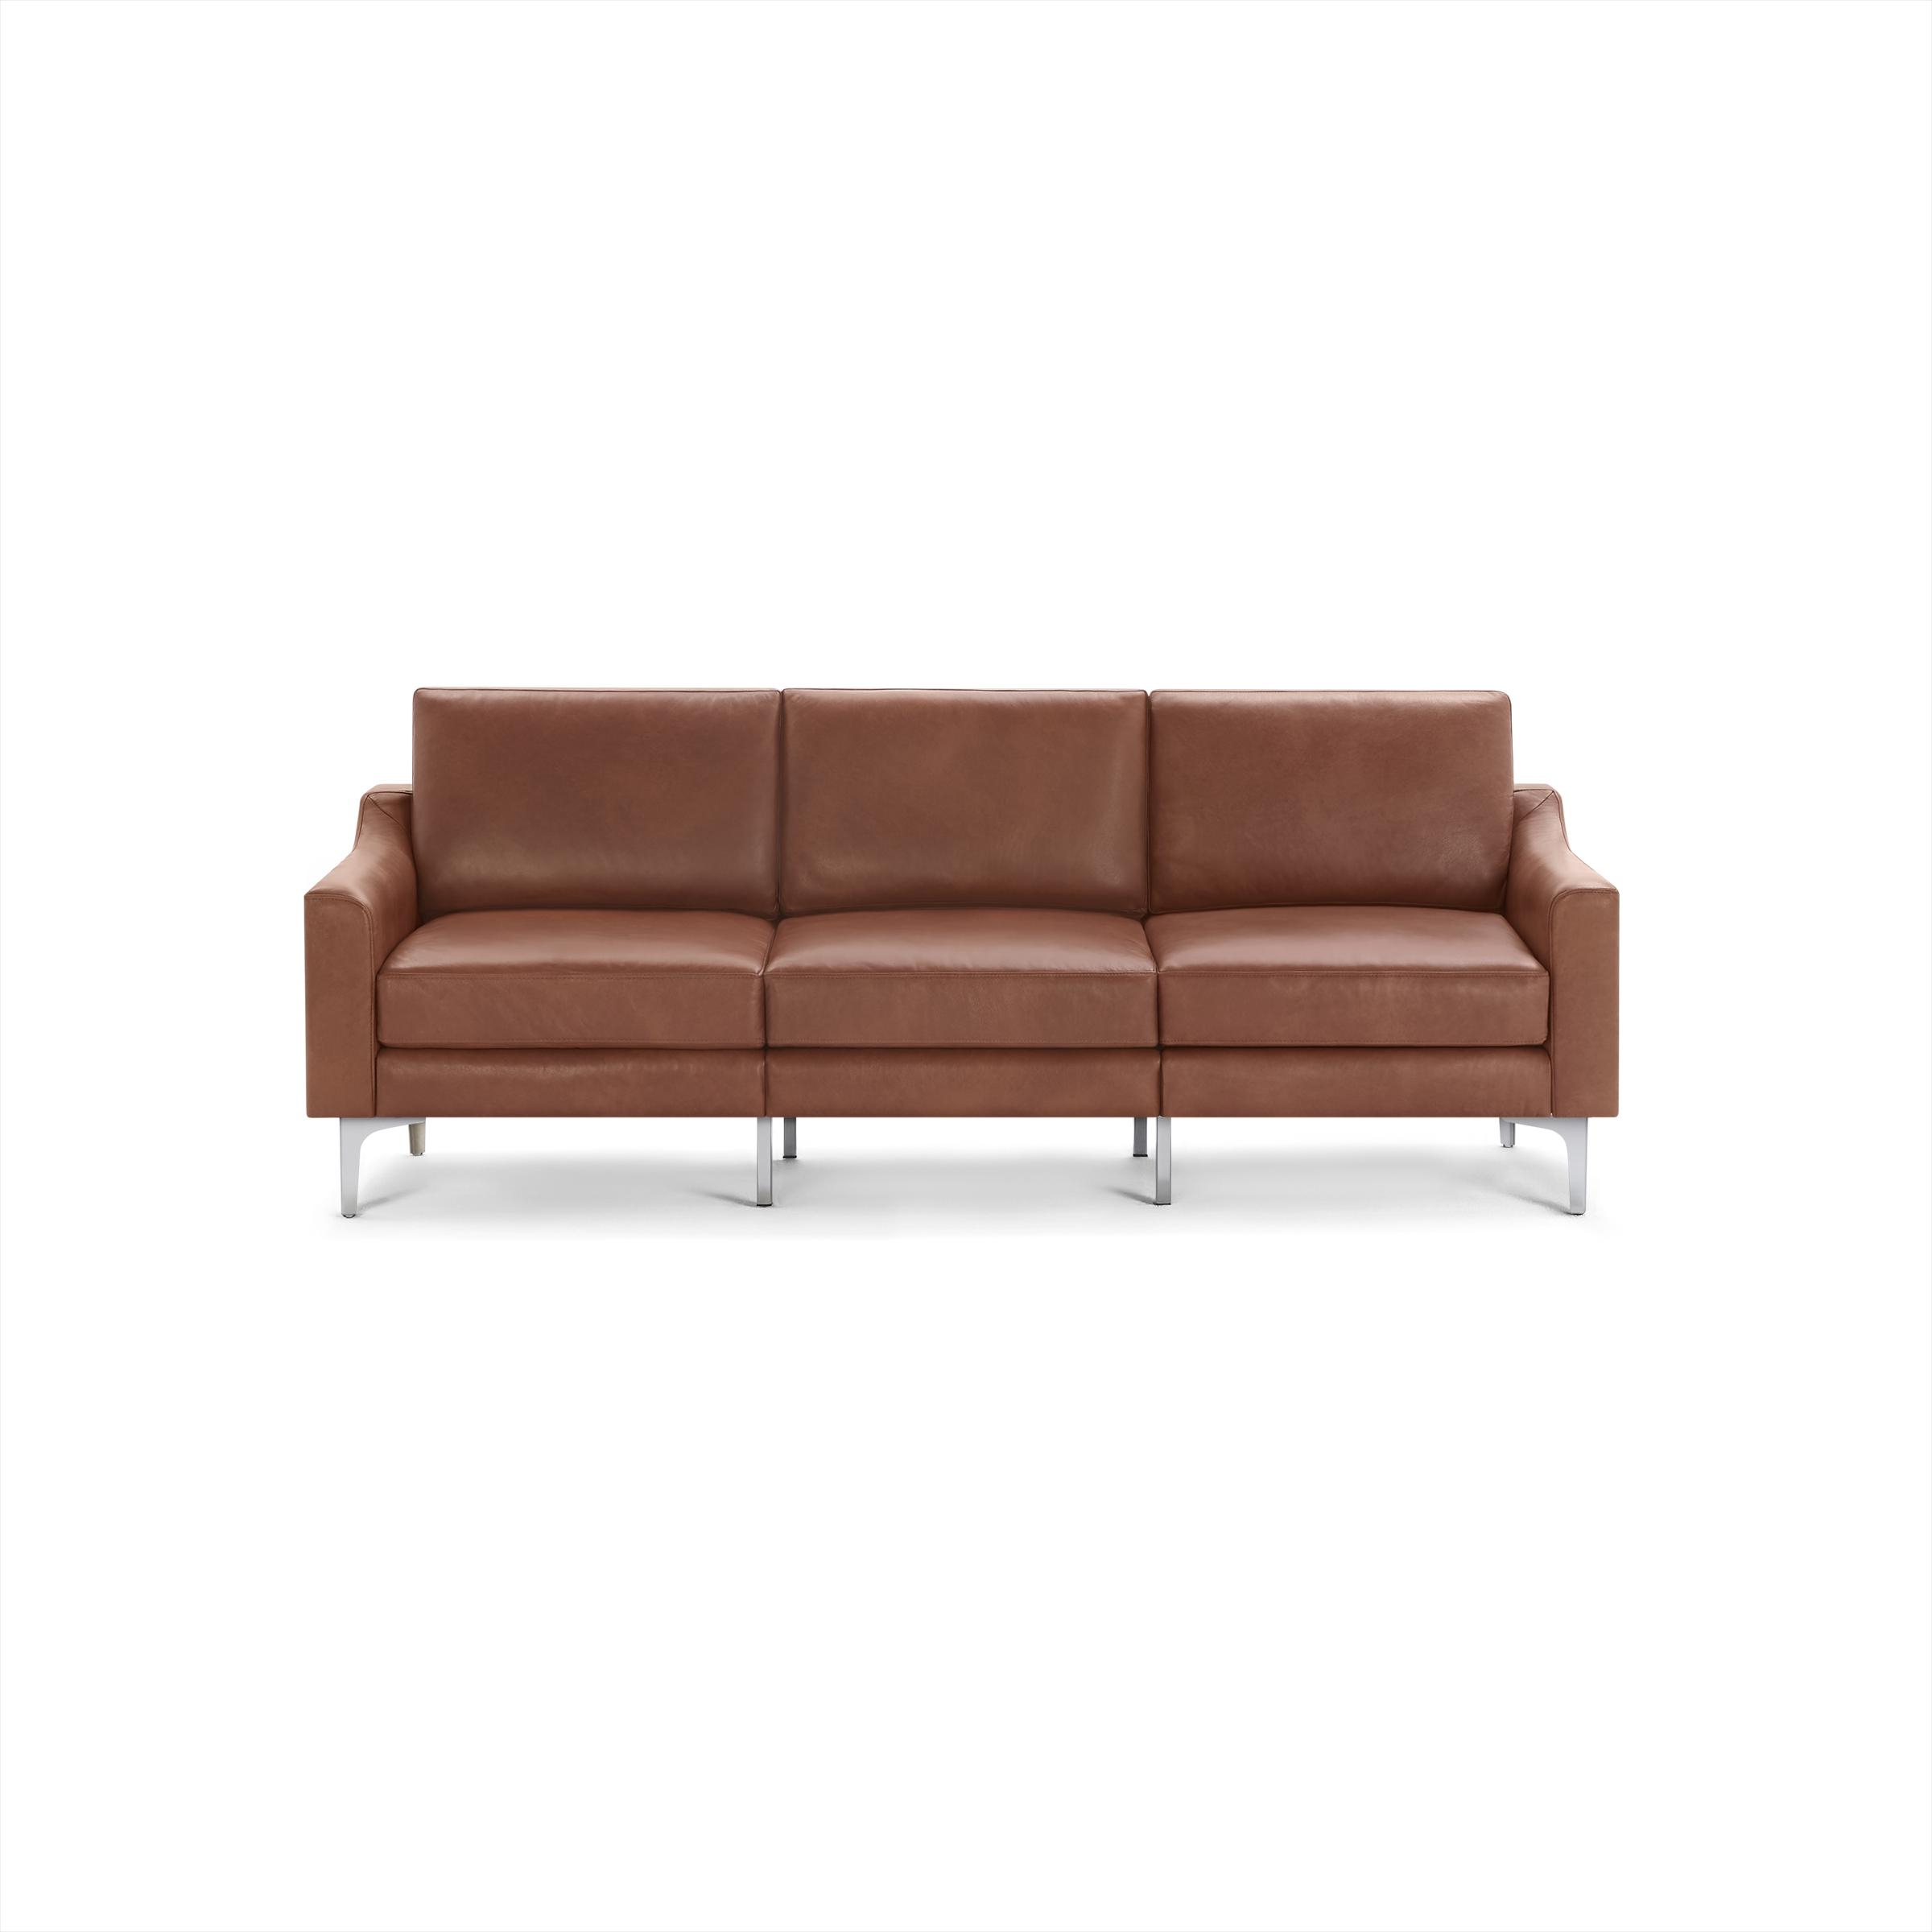 Nomad Leather Sofa in Chestnut, Chrome Legs - Image 0